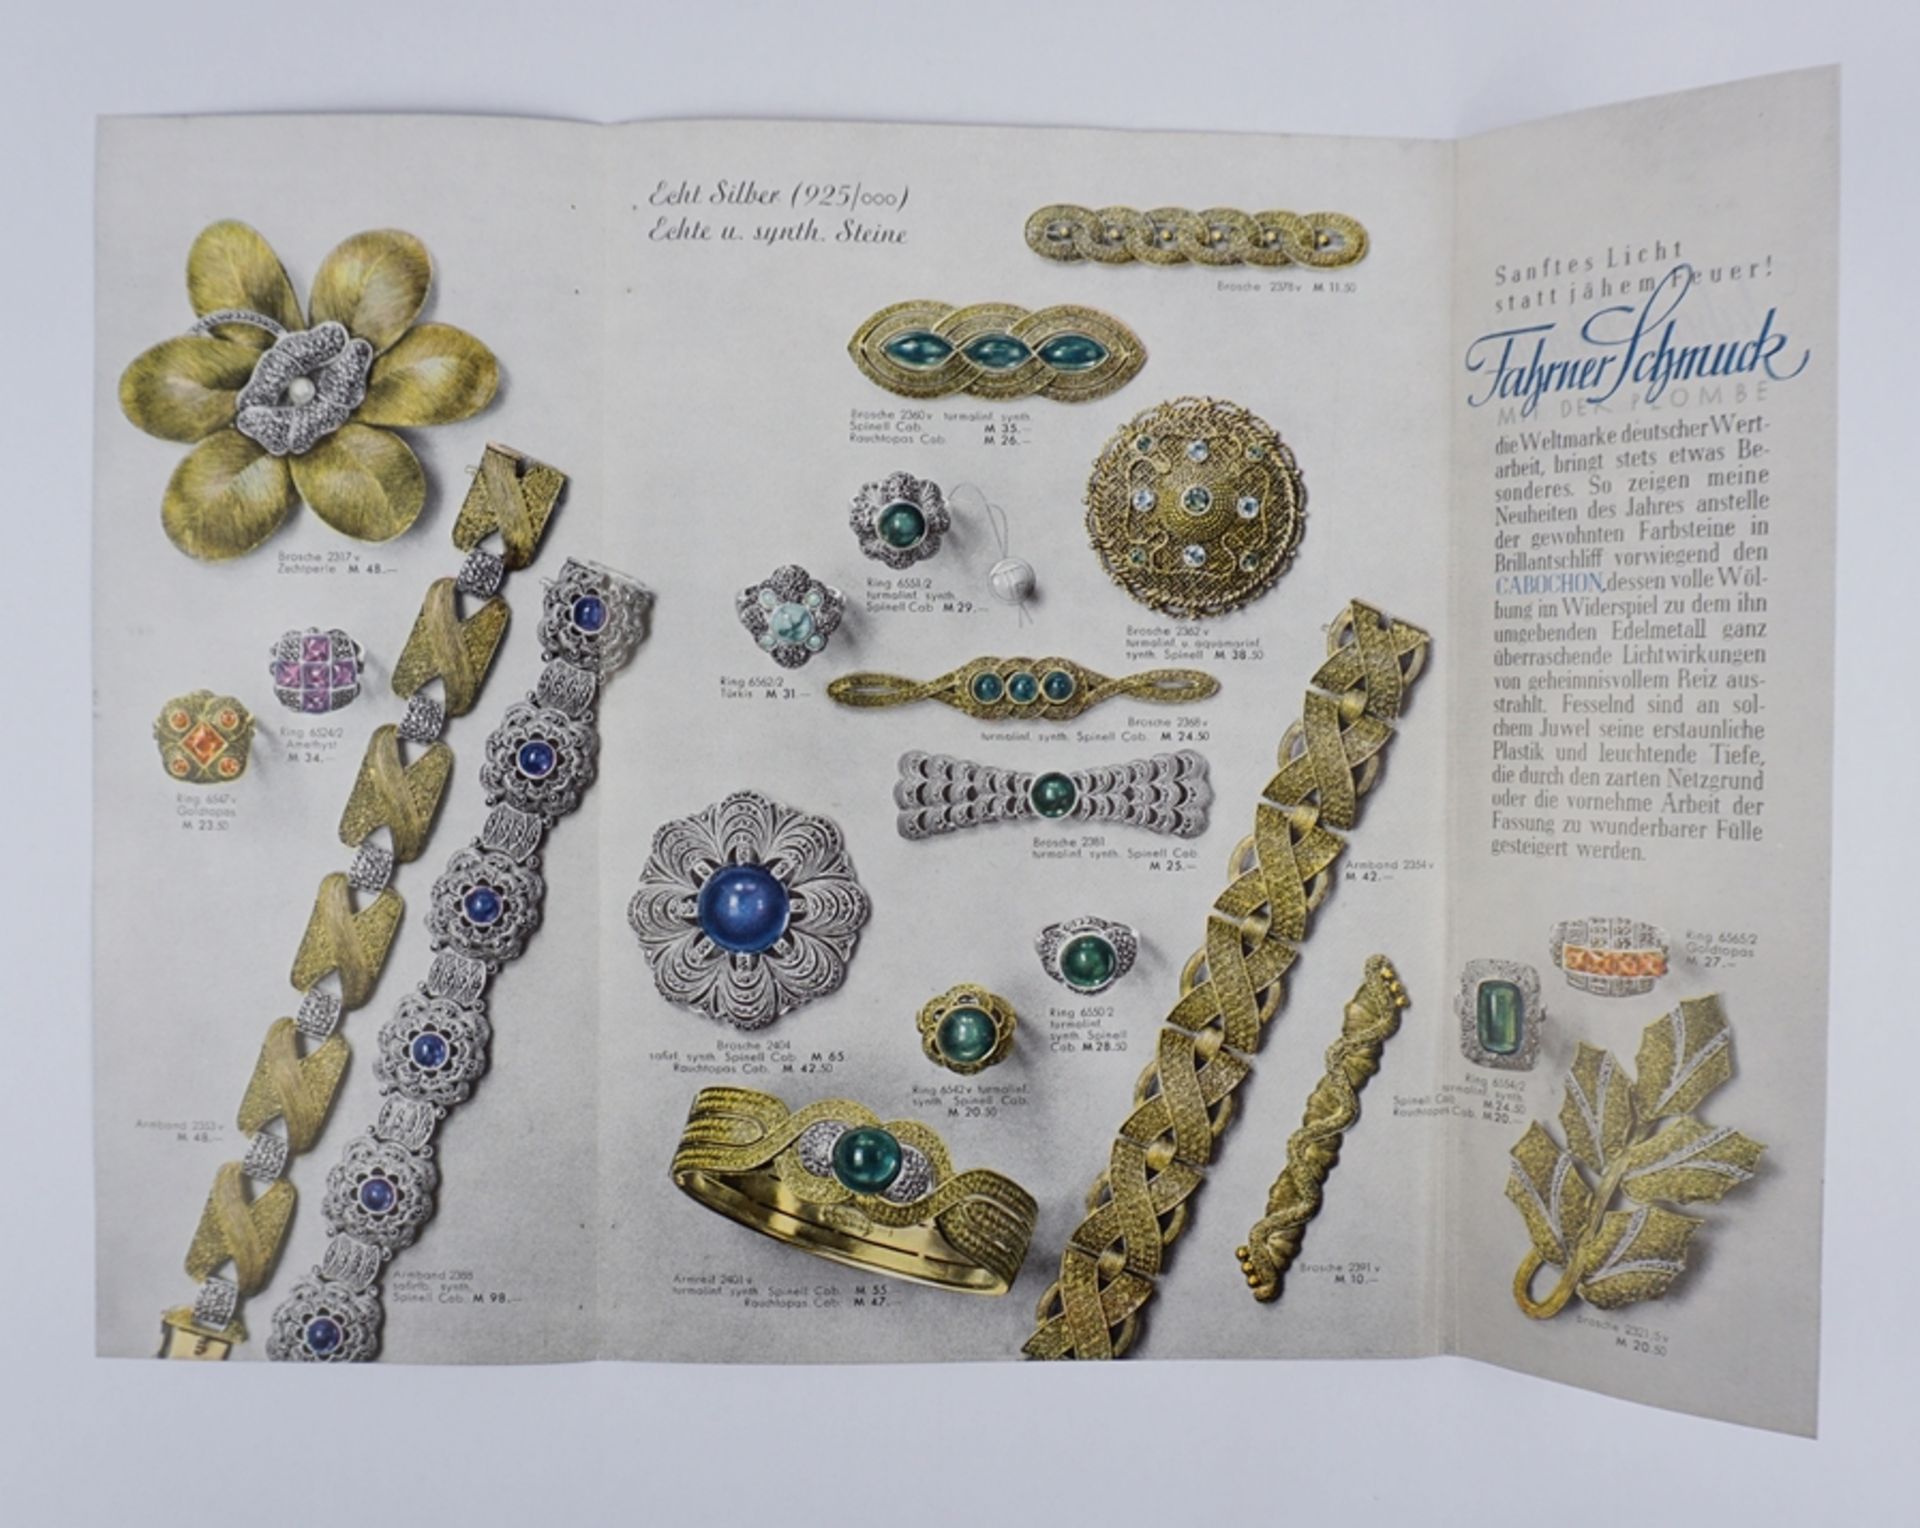 Fahrner jewelry, original advertising leaflet, around 1930/1940 - Image 2 of 3